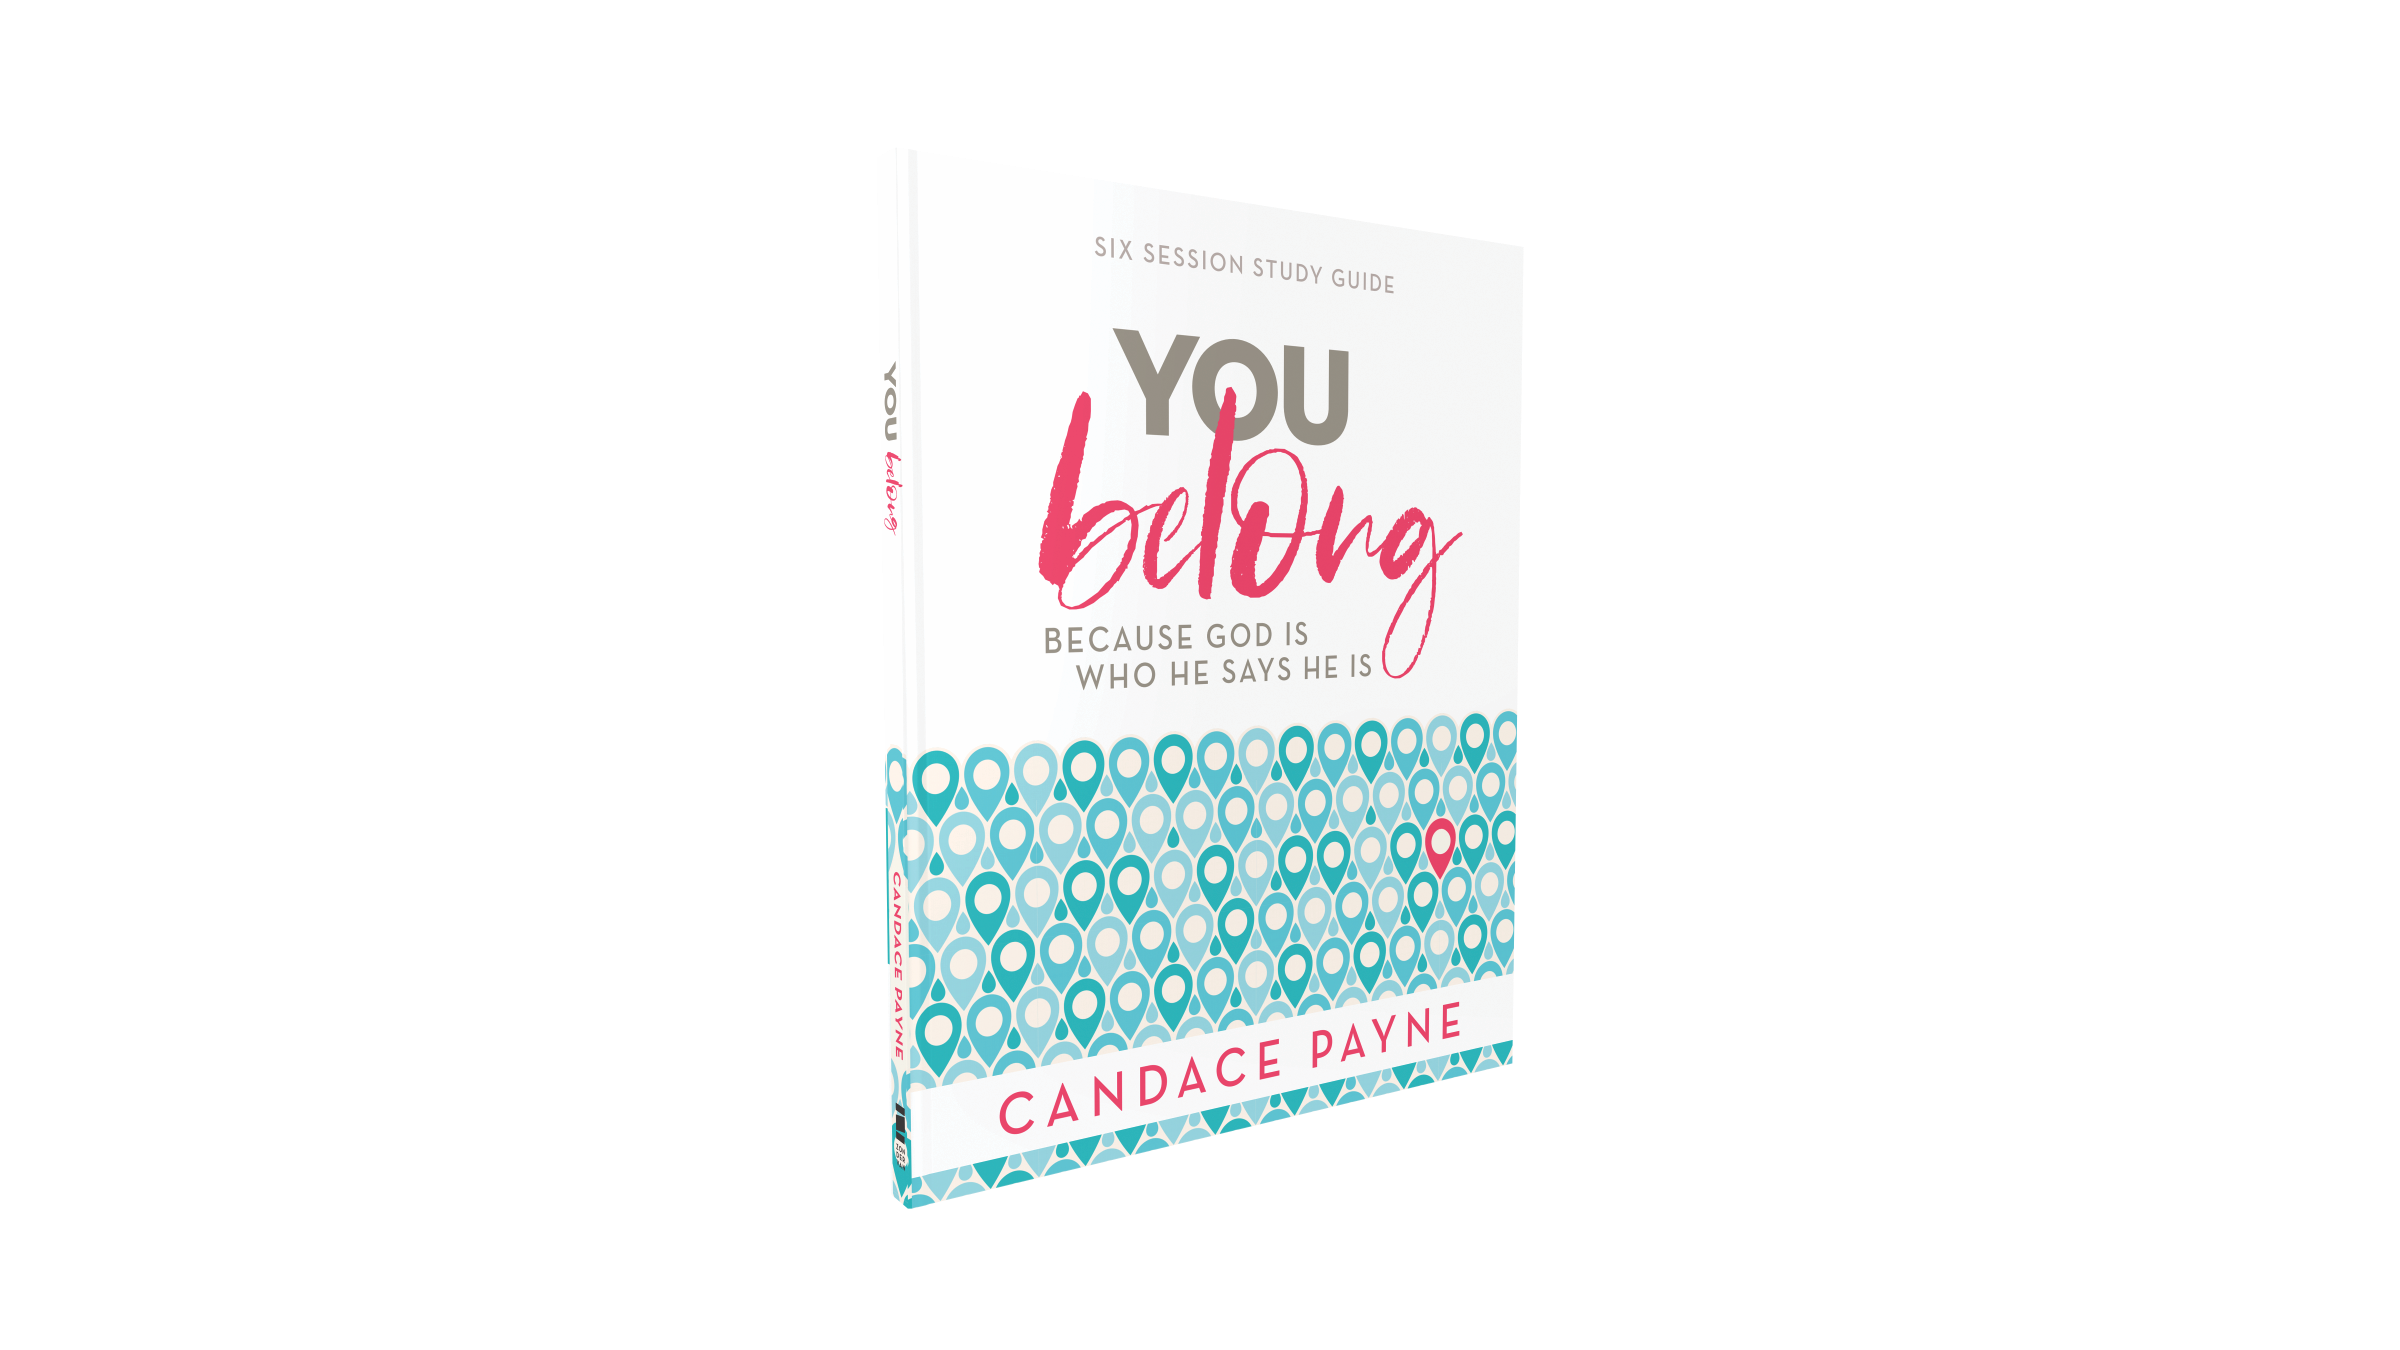 You Belong Study Guide by Candace Payne